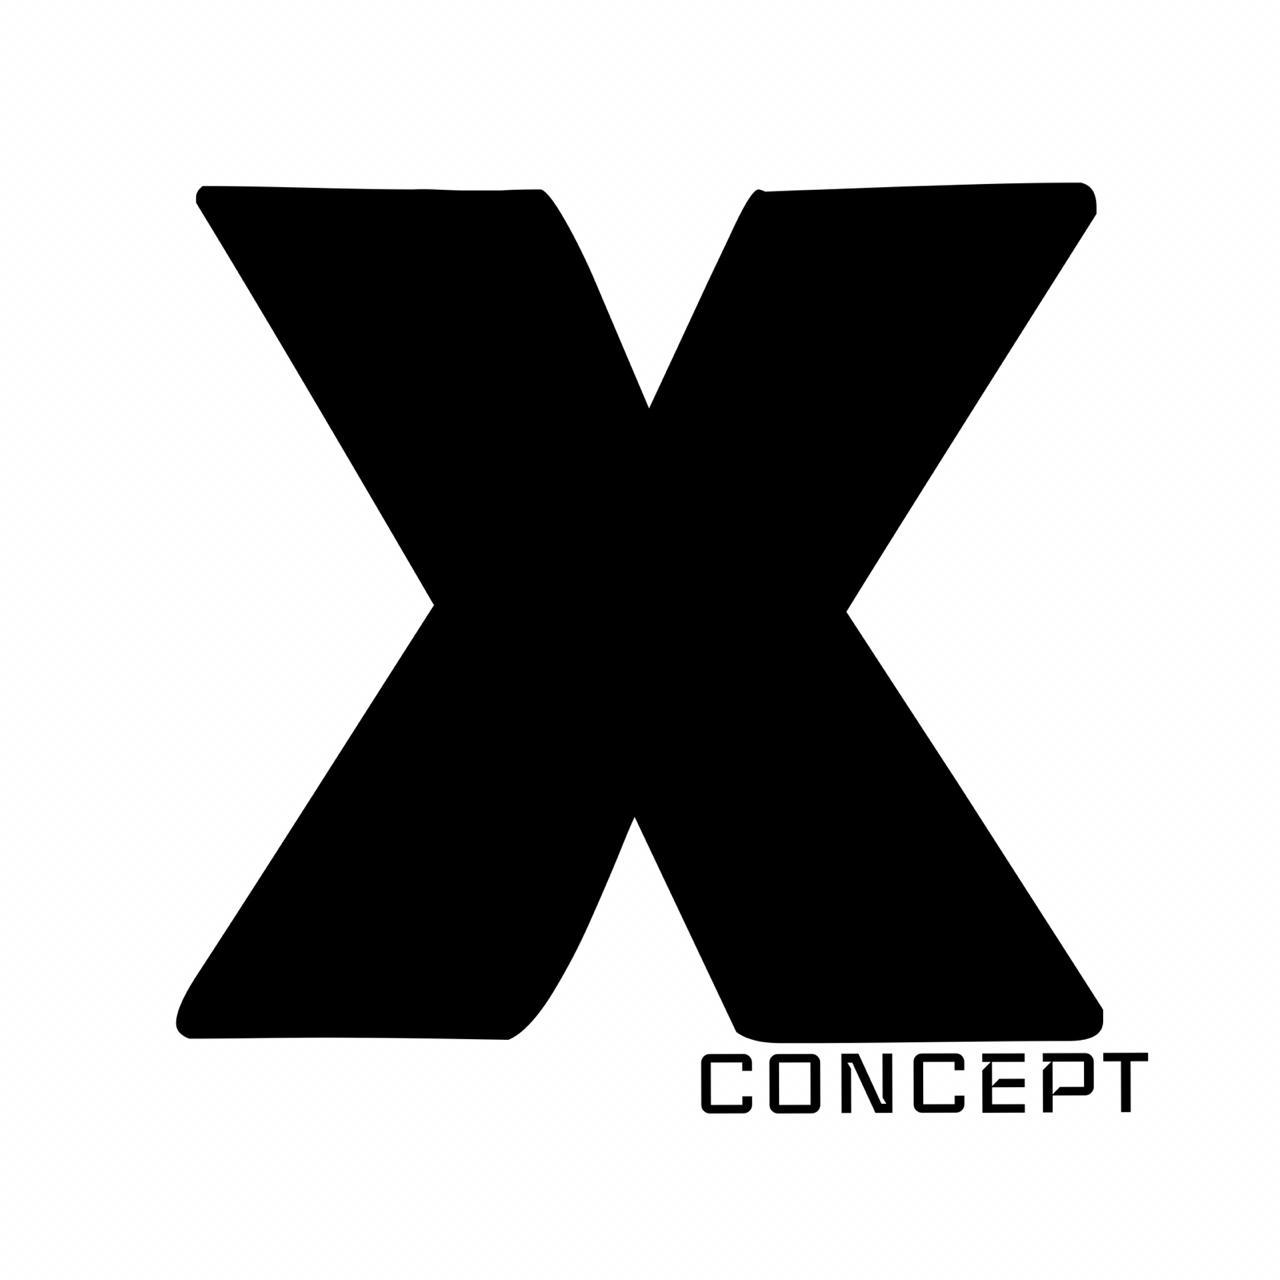 The x concept